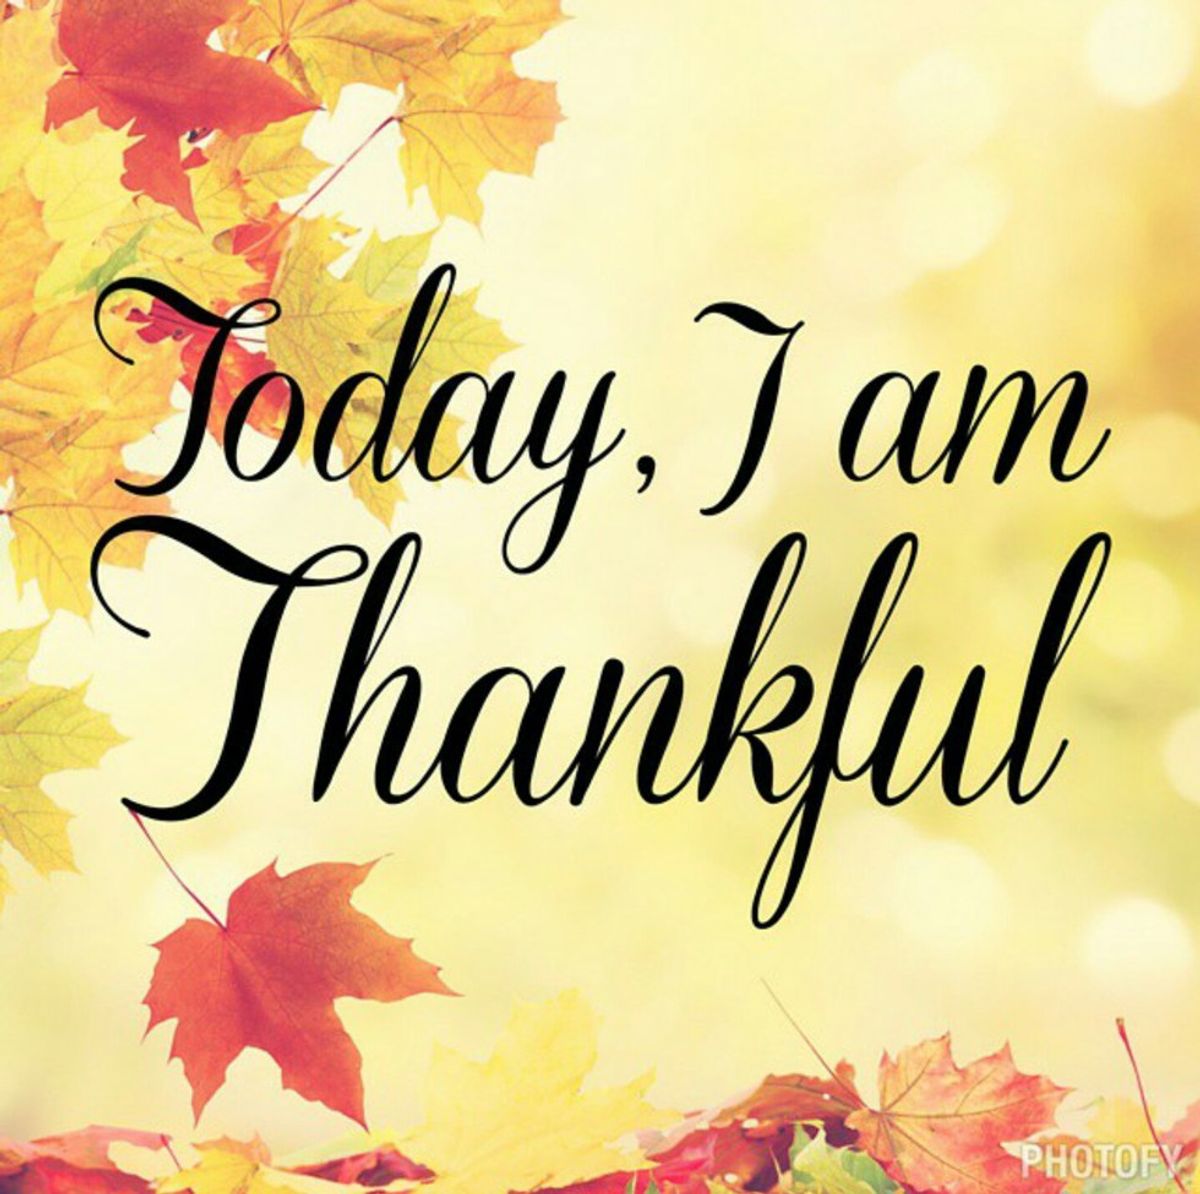 I Am Grateful